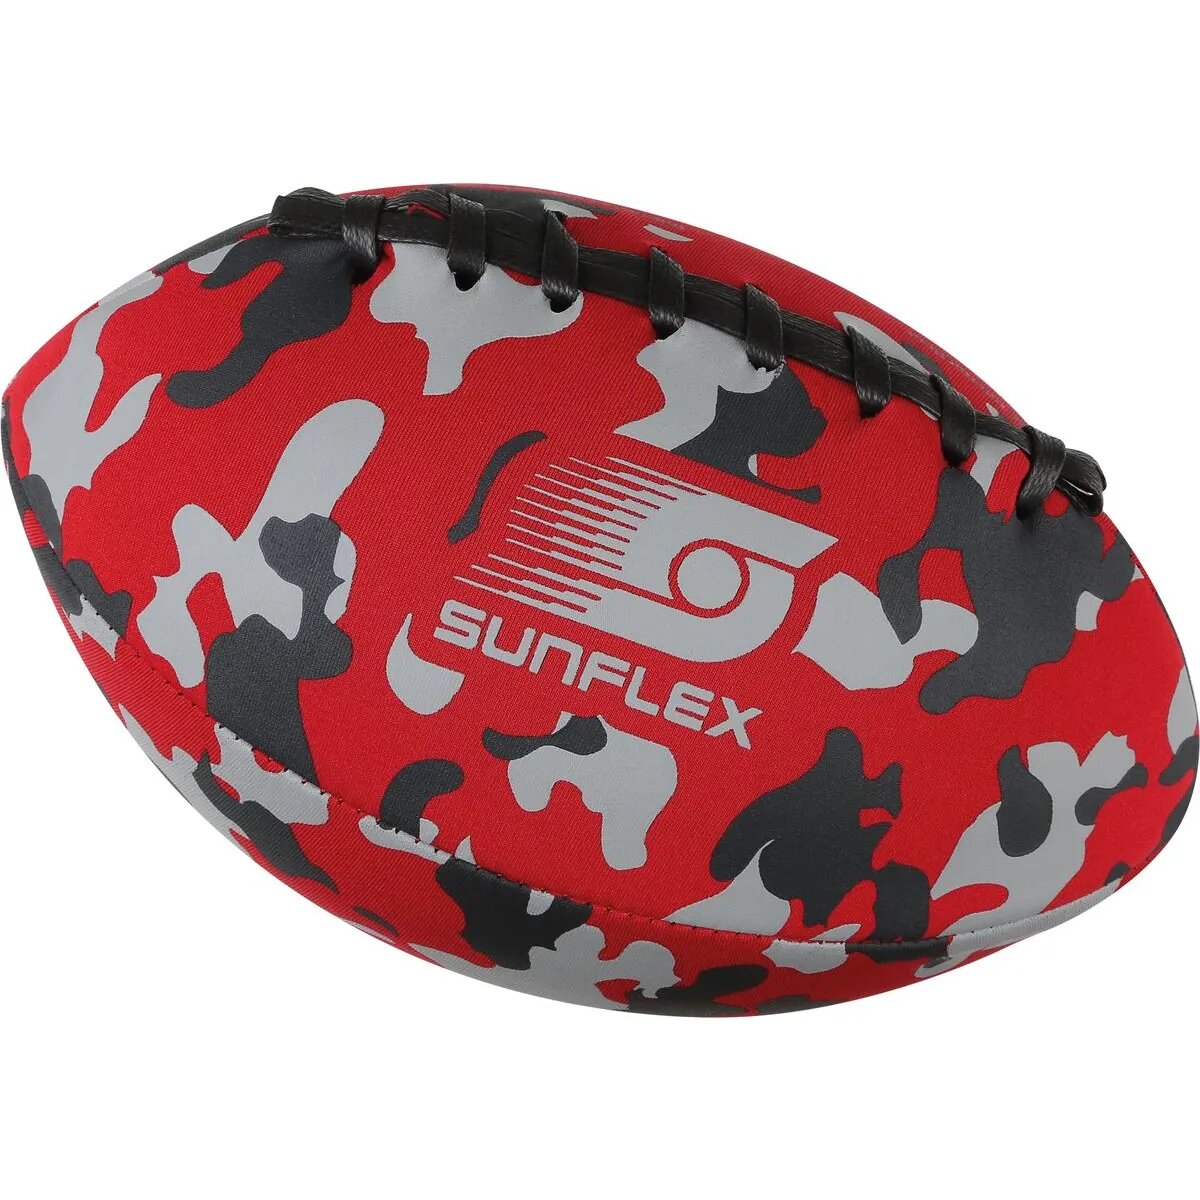 sunflex American Football, camo red